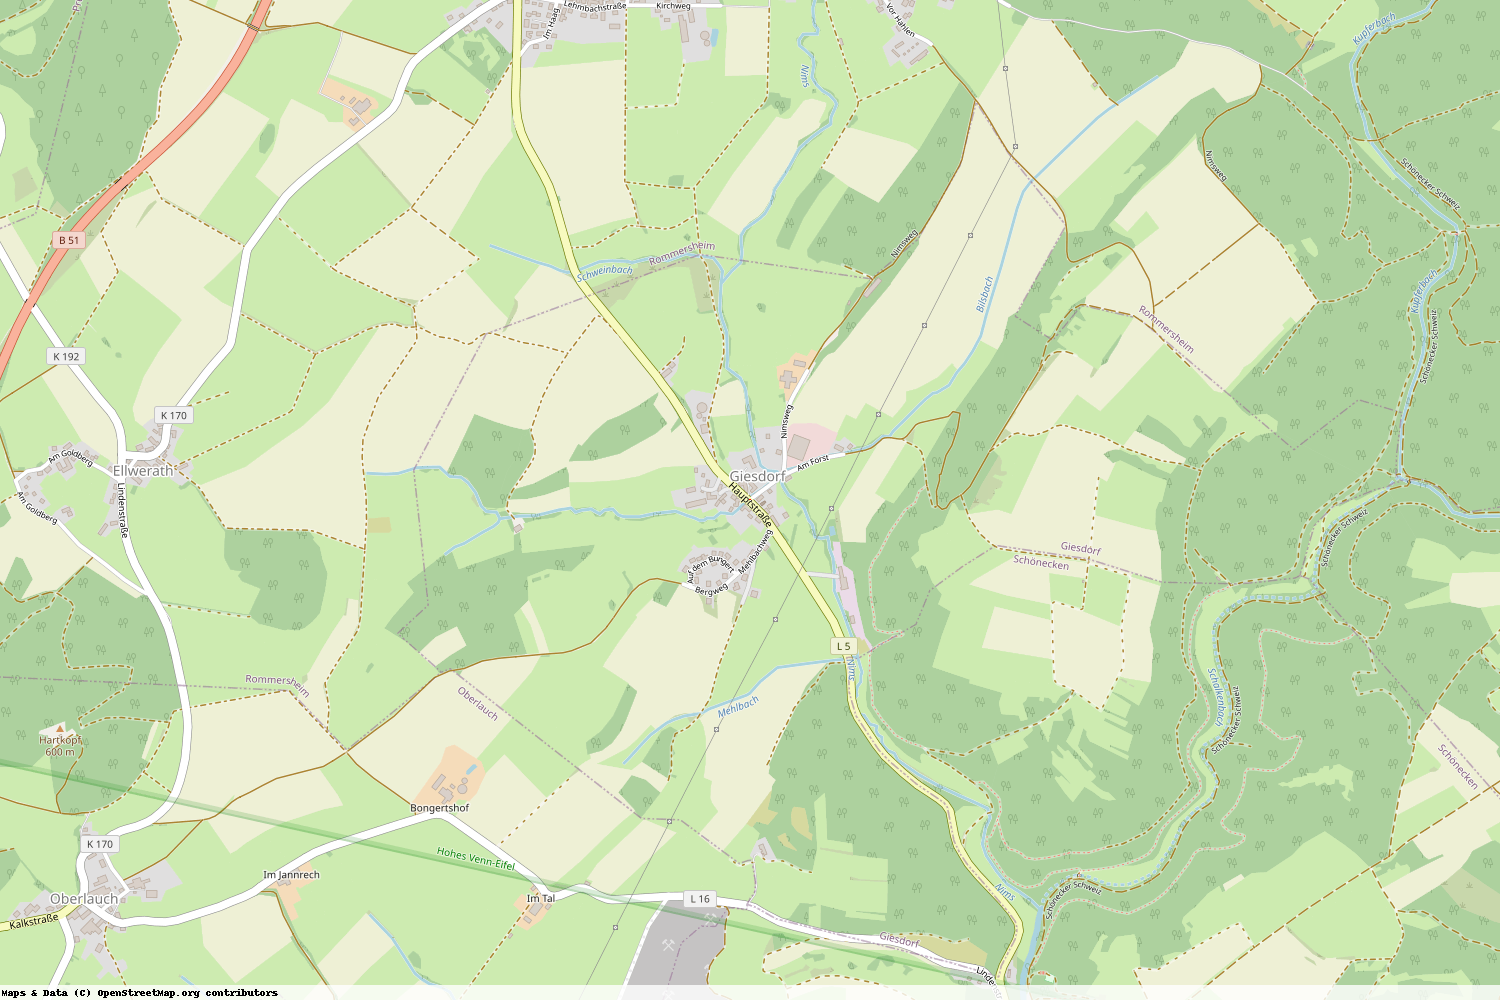 Ist gerade Stromausfall in Rheinland-Pfalz - Eifelkreis Bitburg-Prüm - Giesdorf?